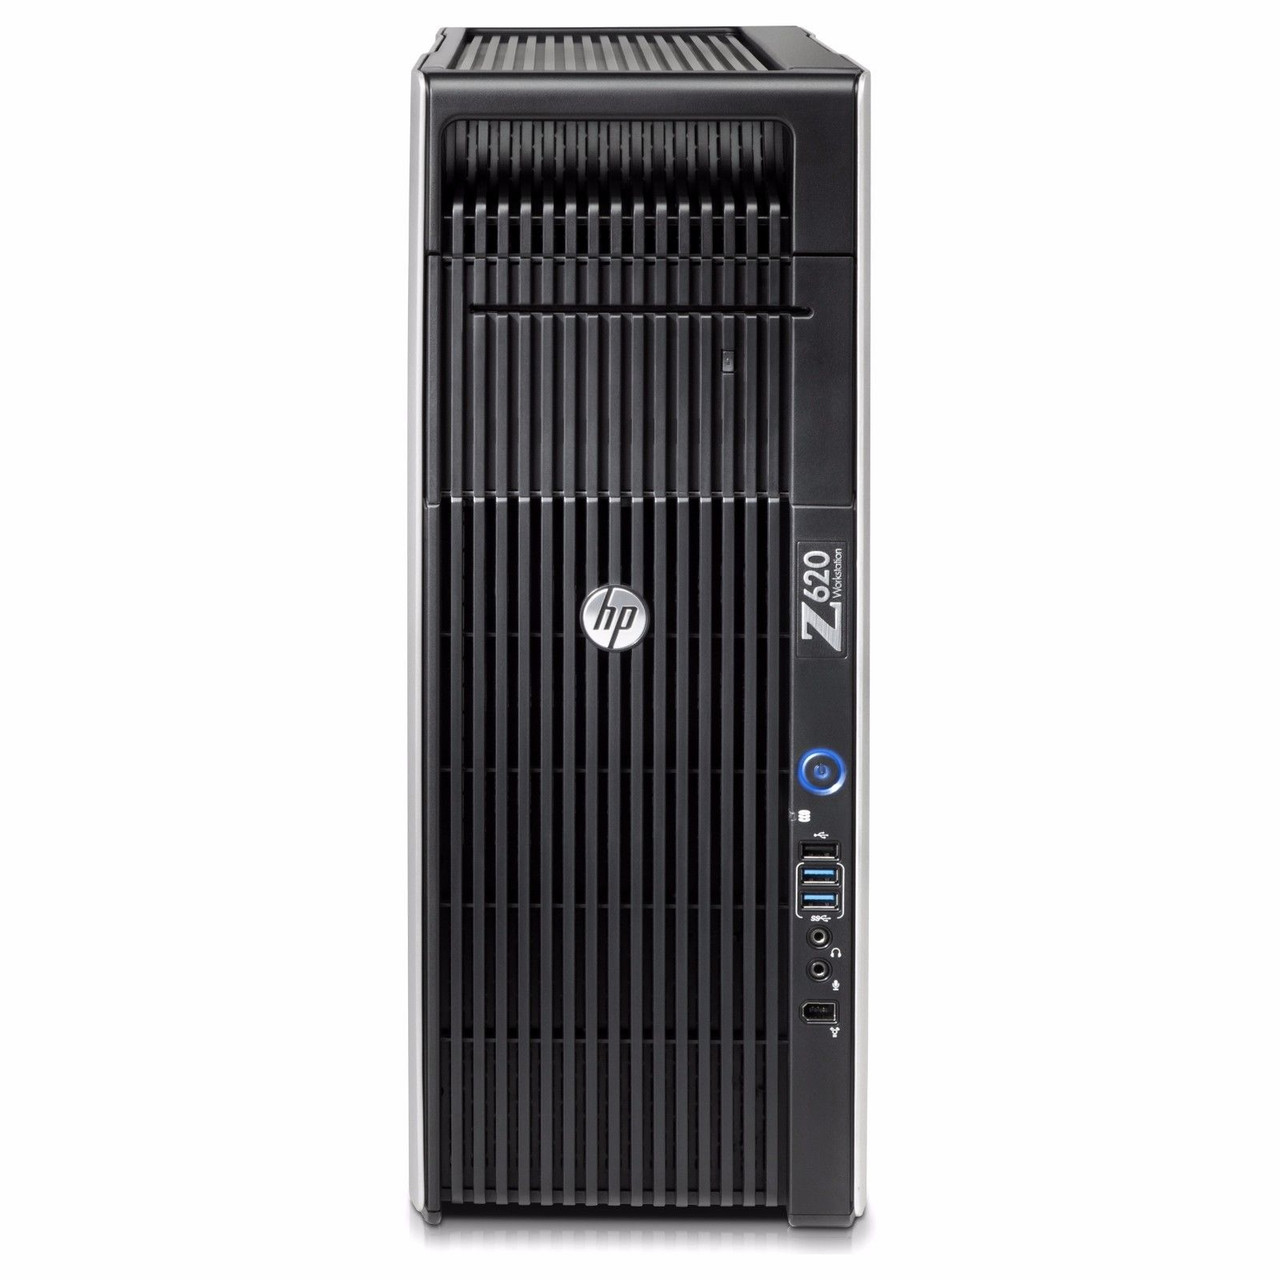 HP Z620 Workstation - 2x Intel Xeon E5-2670 V2 ( 20 Cores ), 64GB RAM,  240GB + 2TB HDD, Nvidia Quadro K5000 4GB, Windows 10 Pro